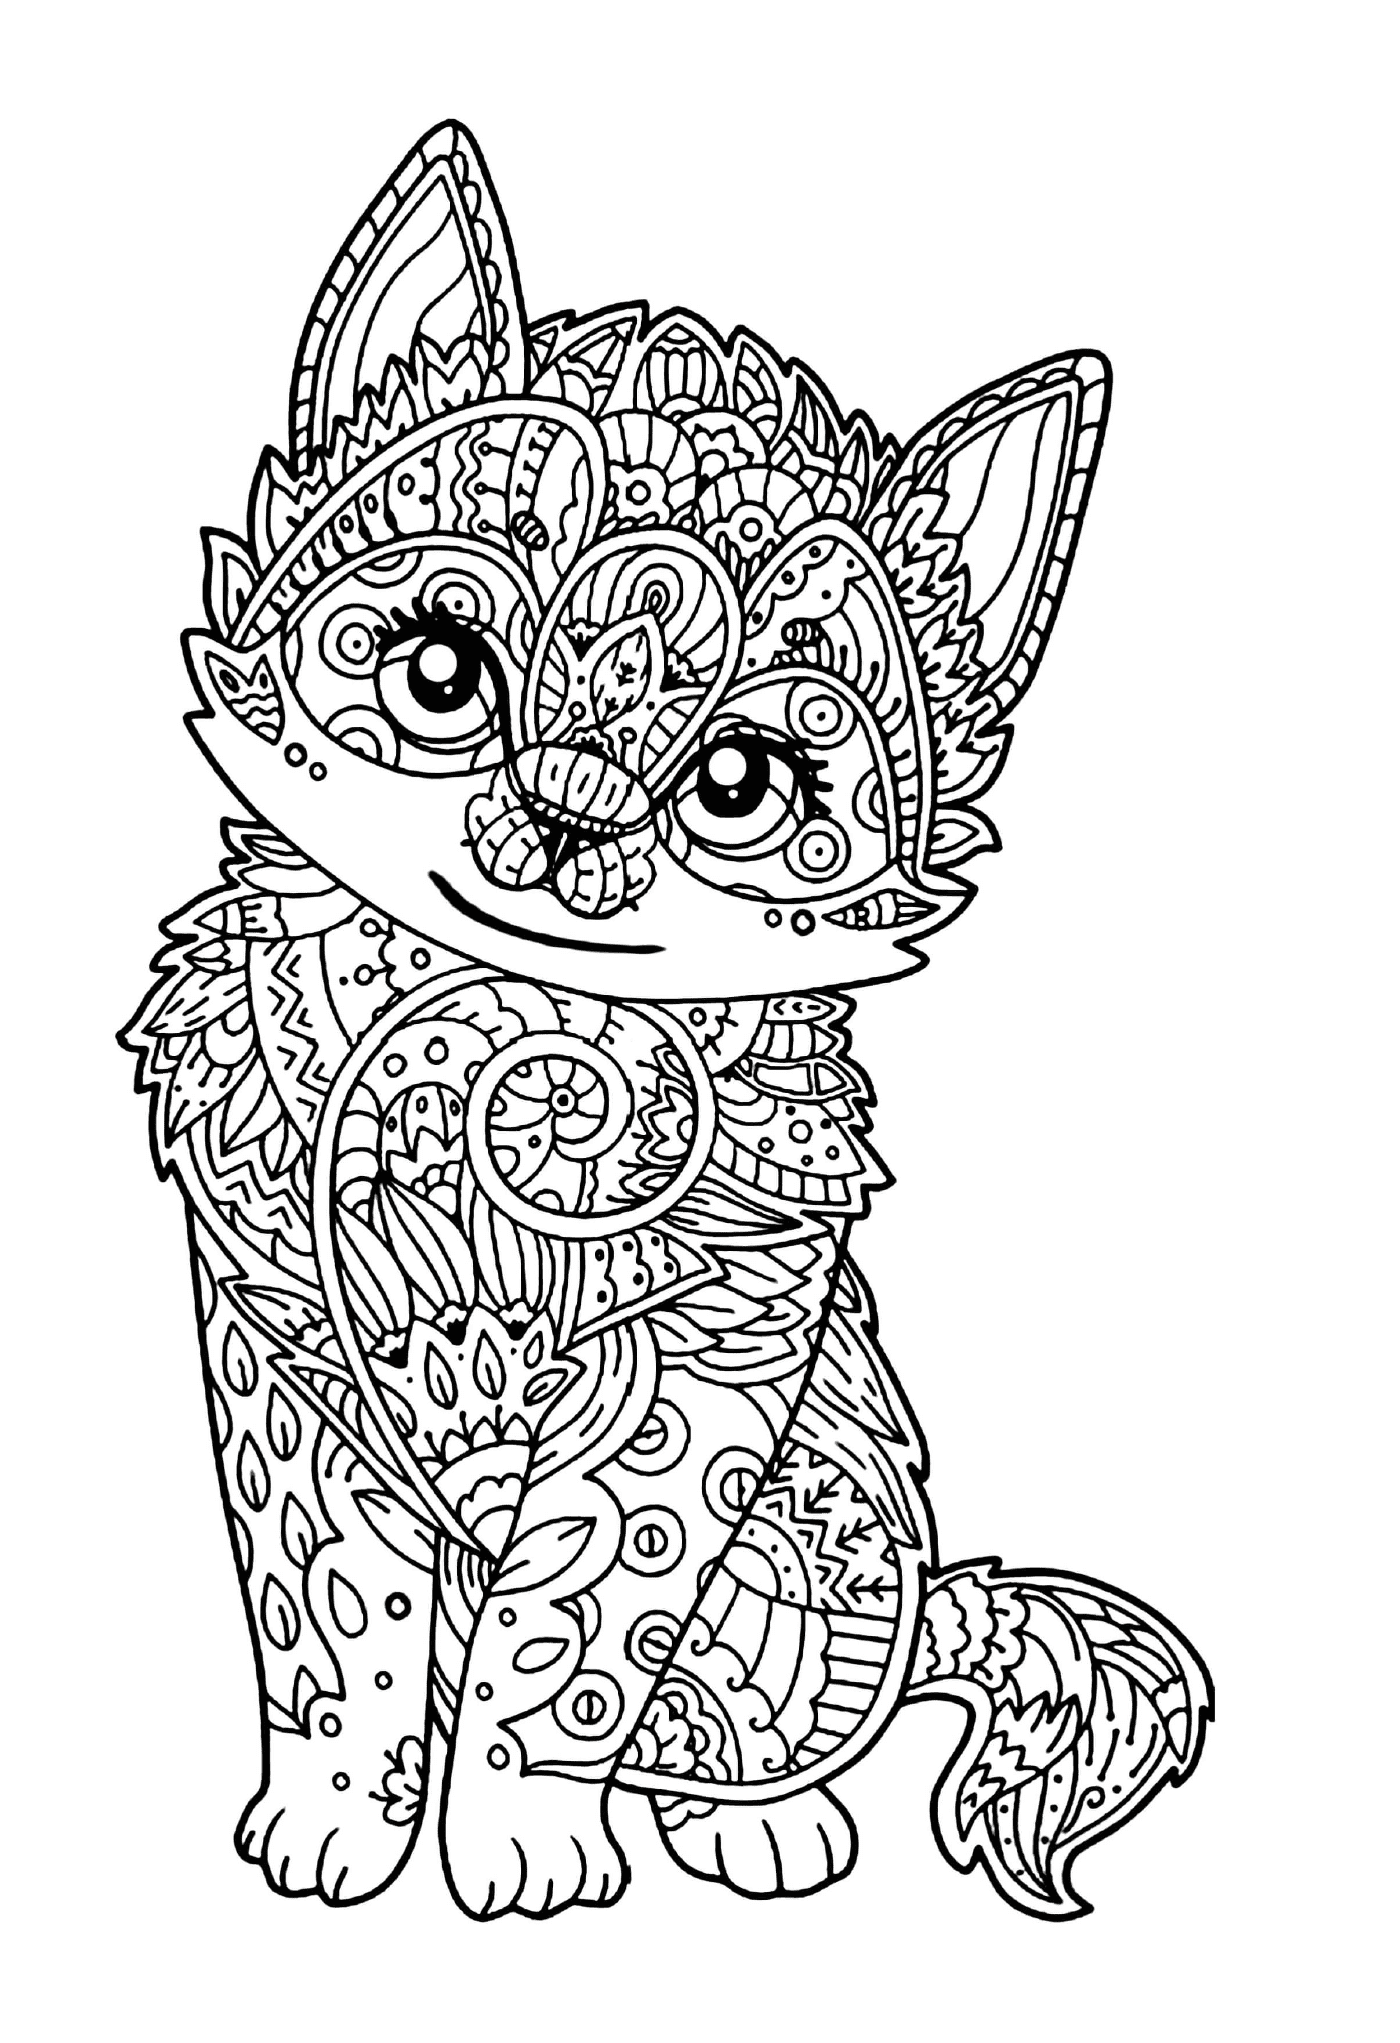  Un bel mandala gattino adulto 